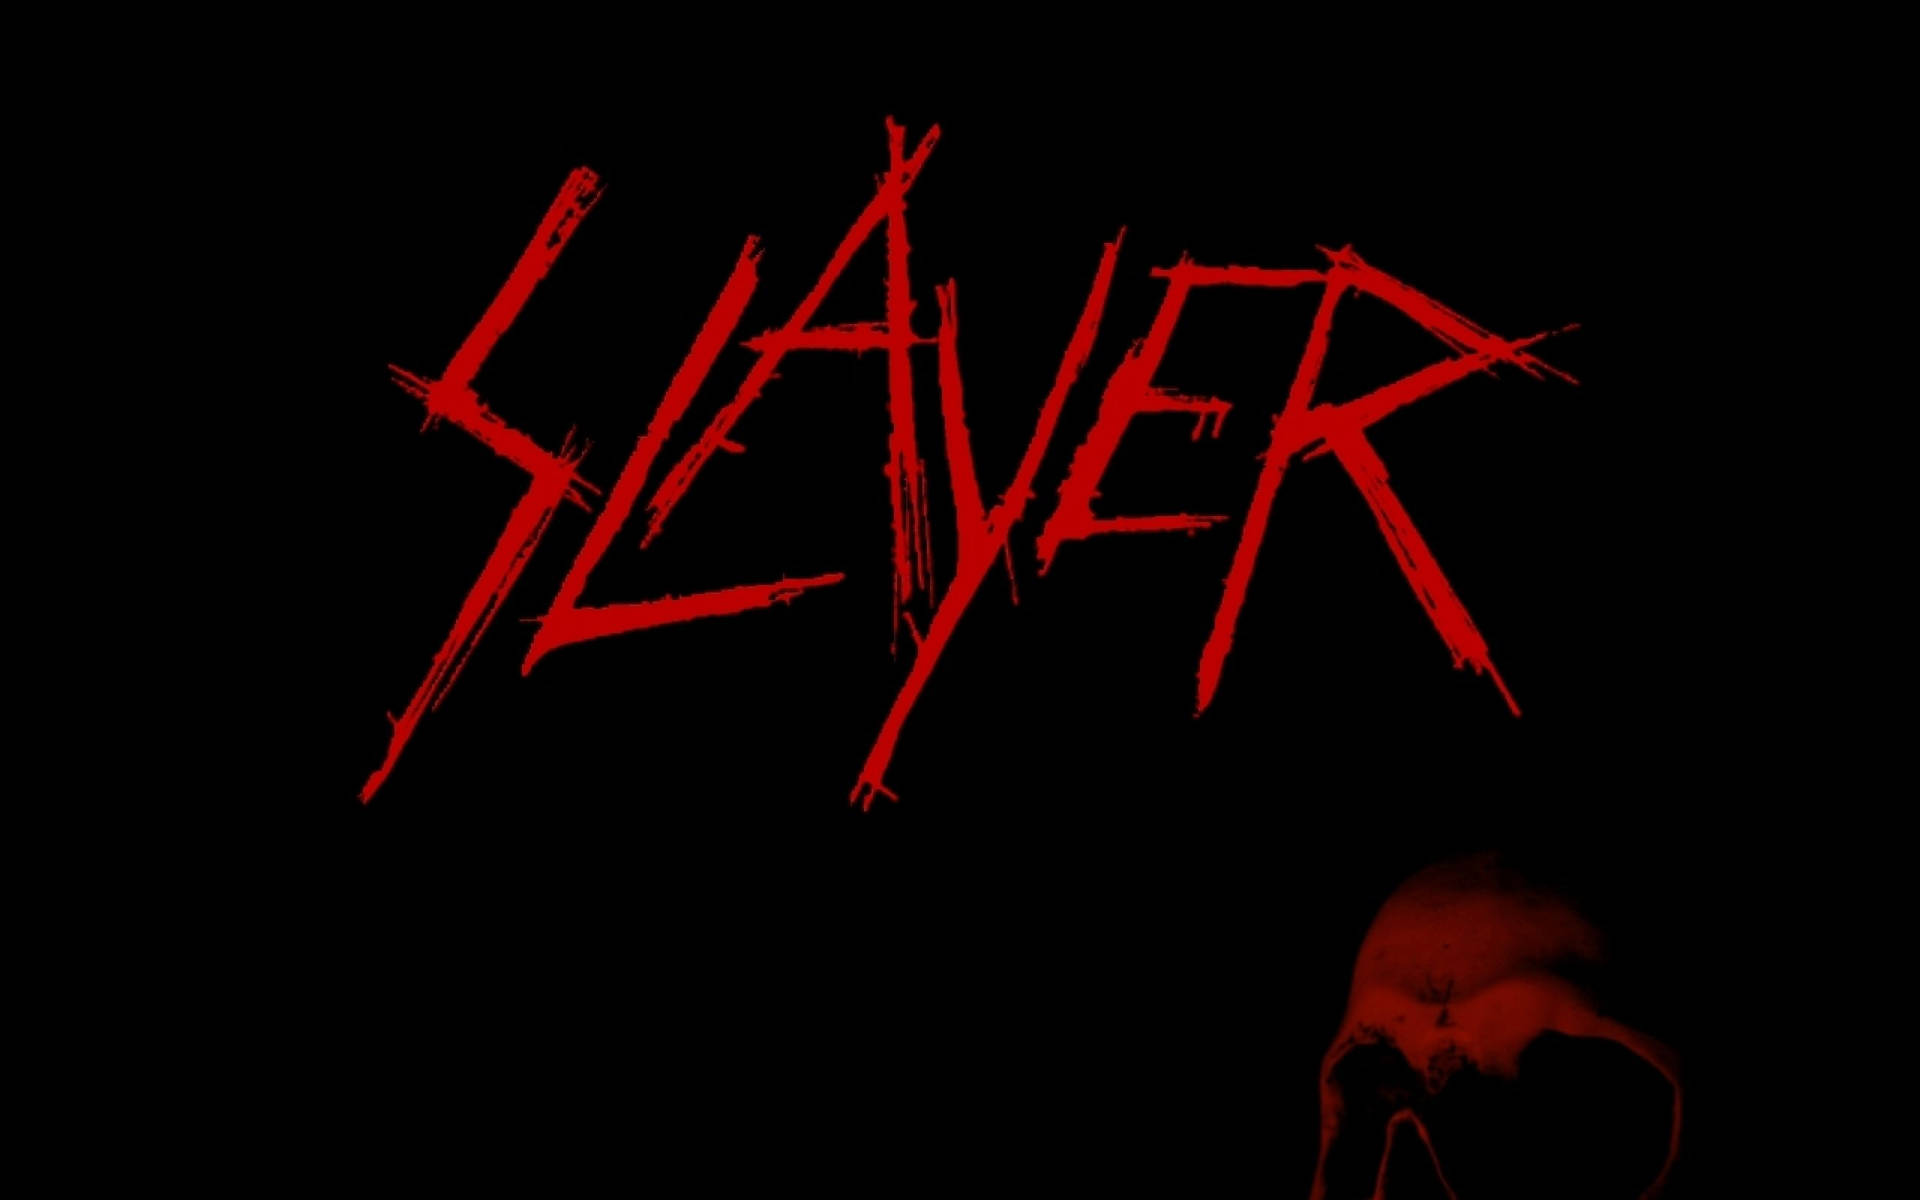 Red Slayer Skull Logo Background